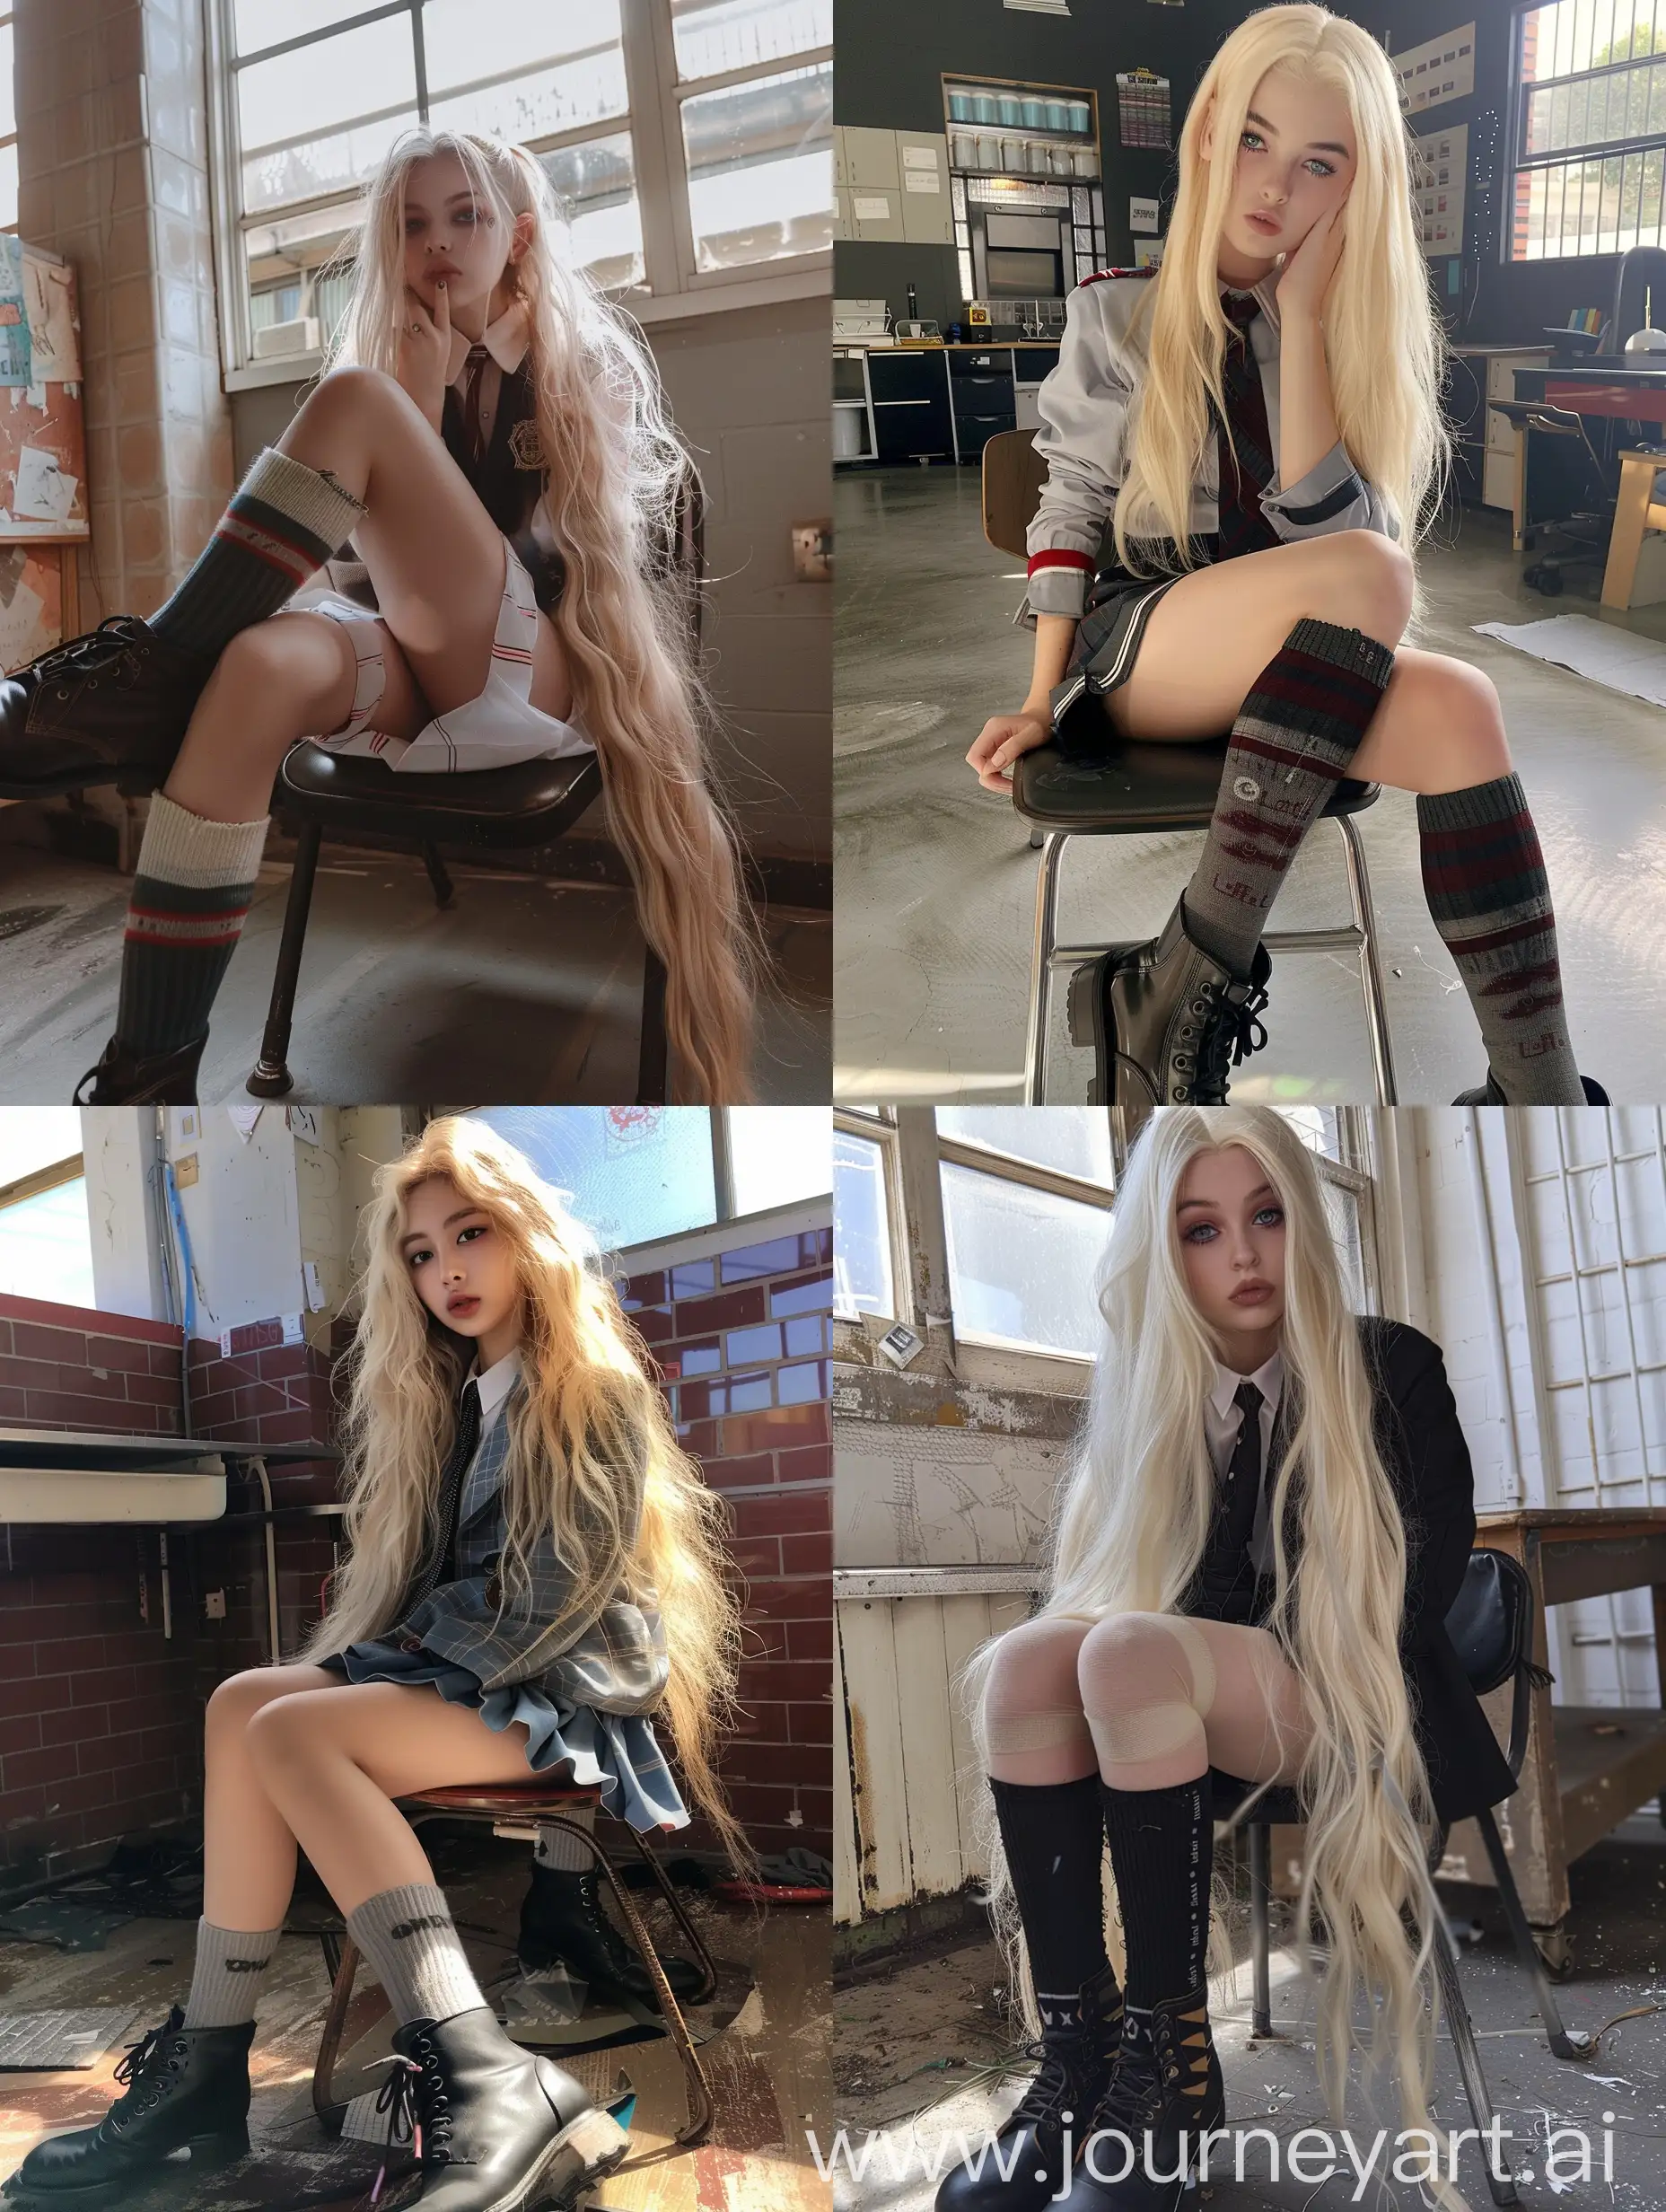 Blonde-Influencer-Girl-in-School-Uniform-Taking-Natural-Selfie-with-iPhone